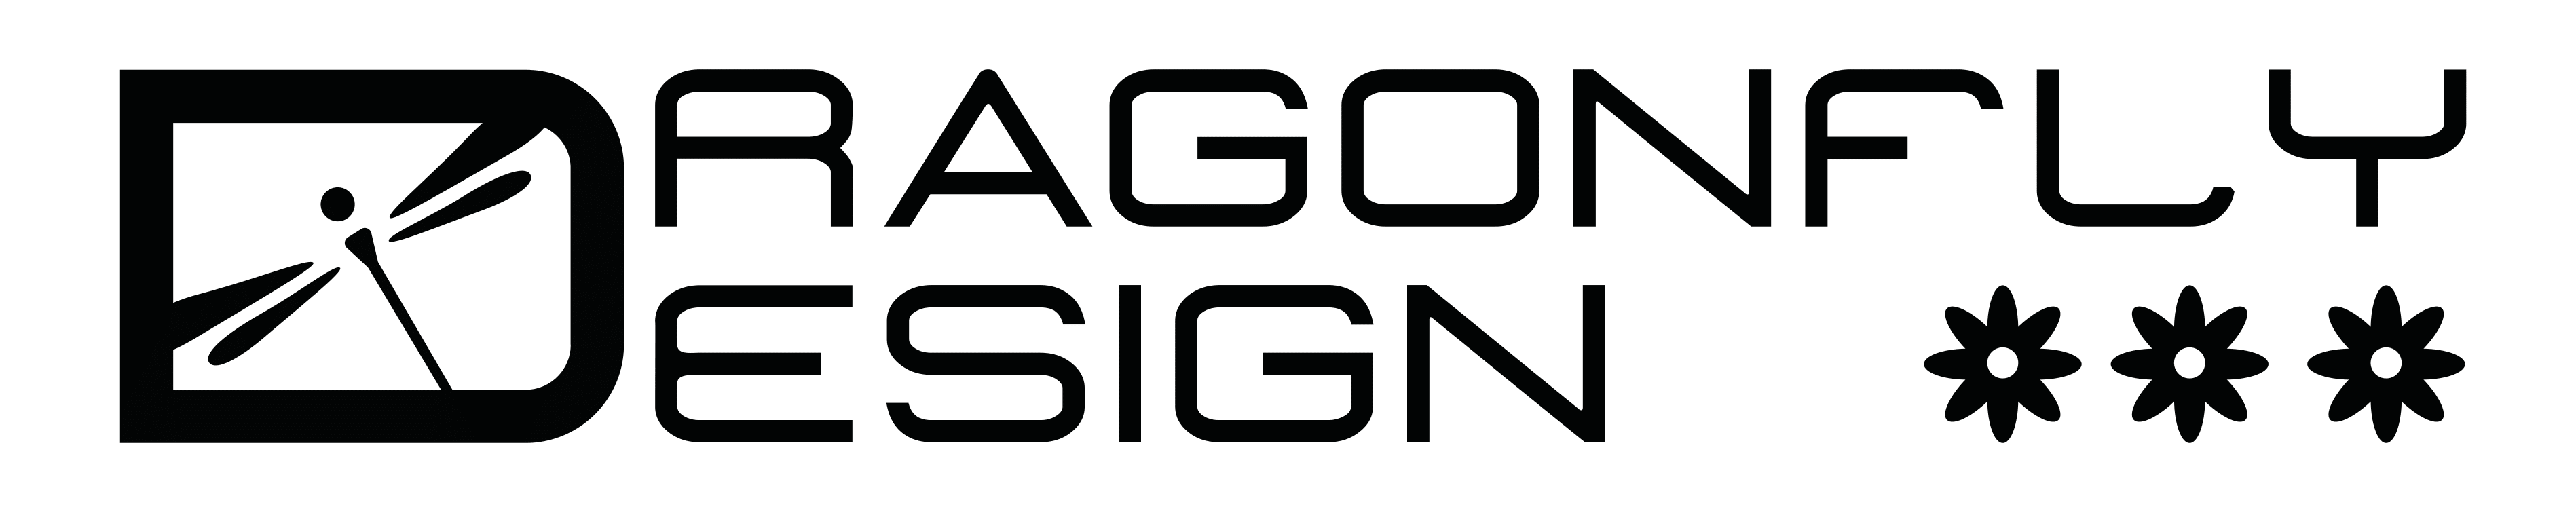 Dragonfly-Design